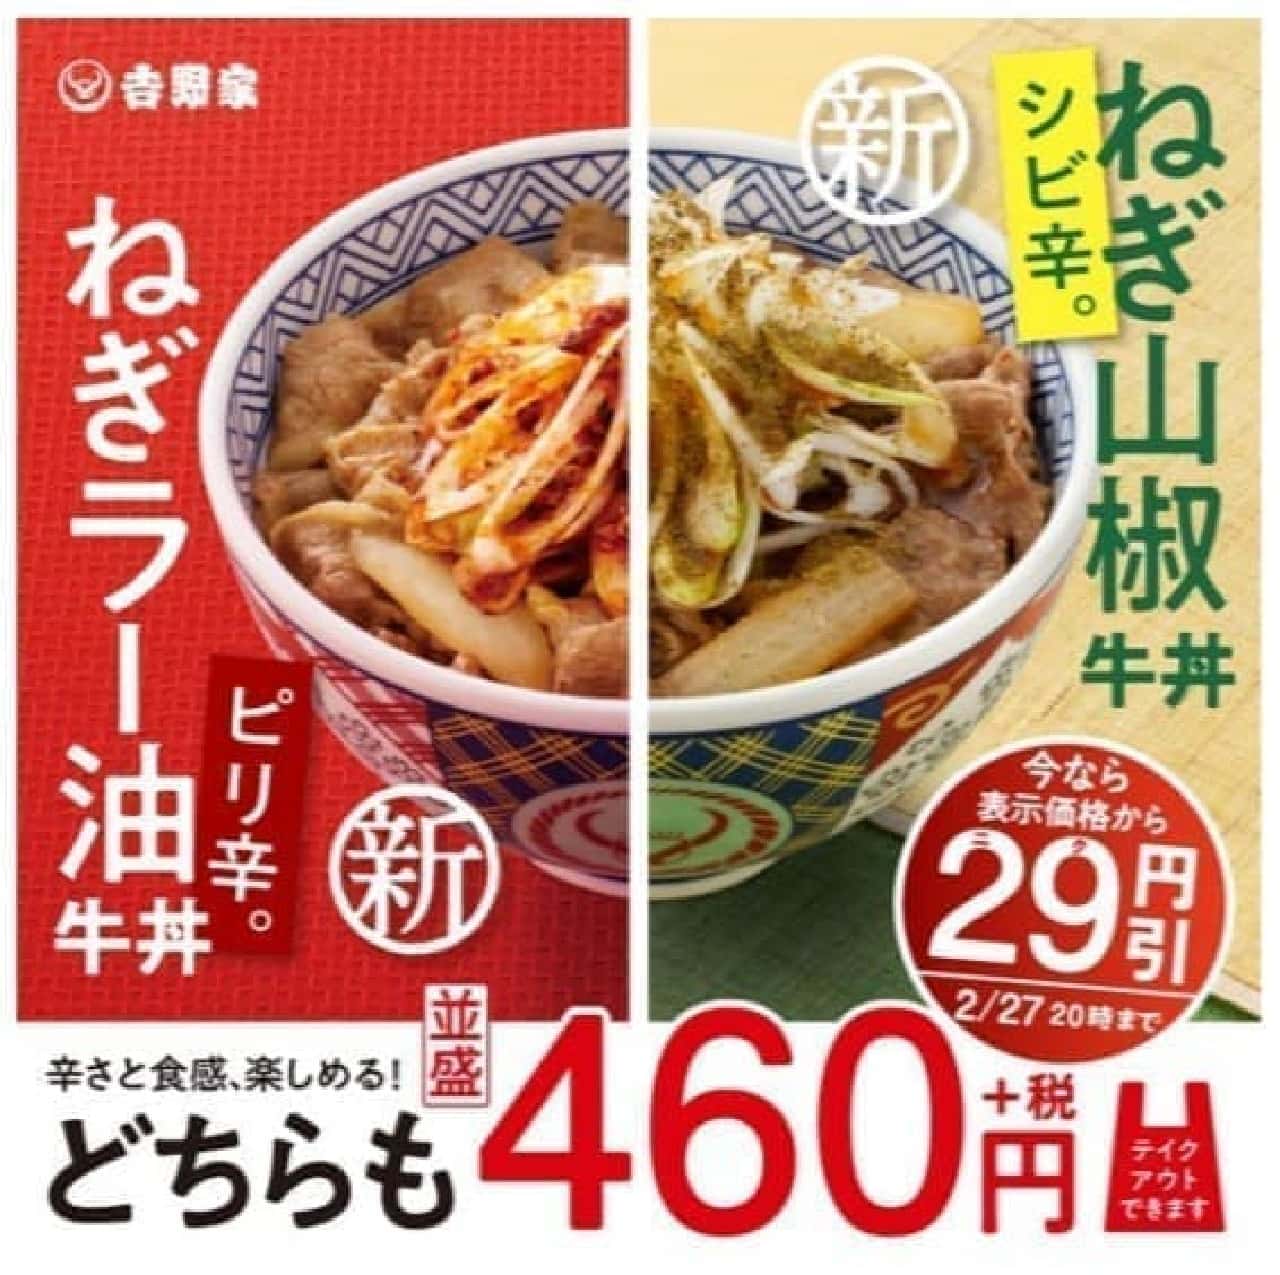 At each Yoshinoya store, "Negi-ra oil beef bowl" and "Negi-sansho beef bowl"